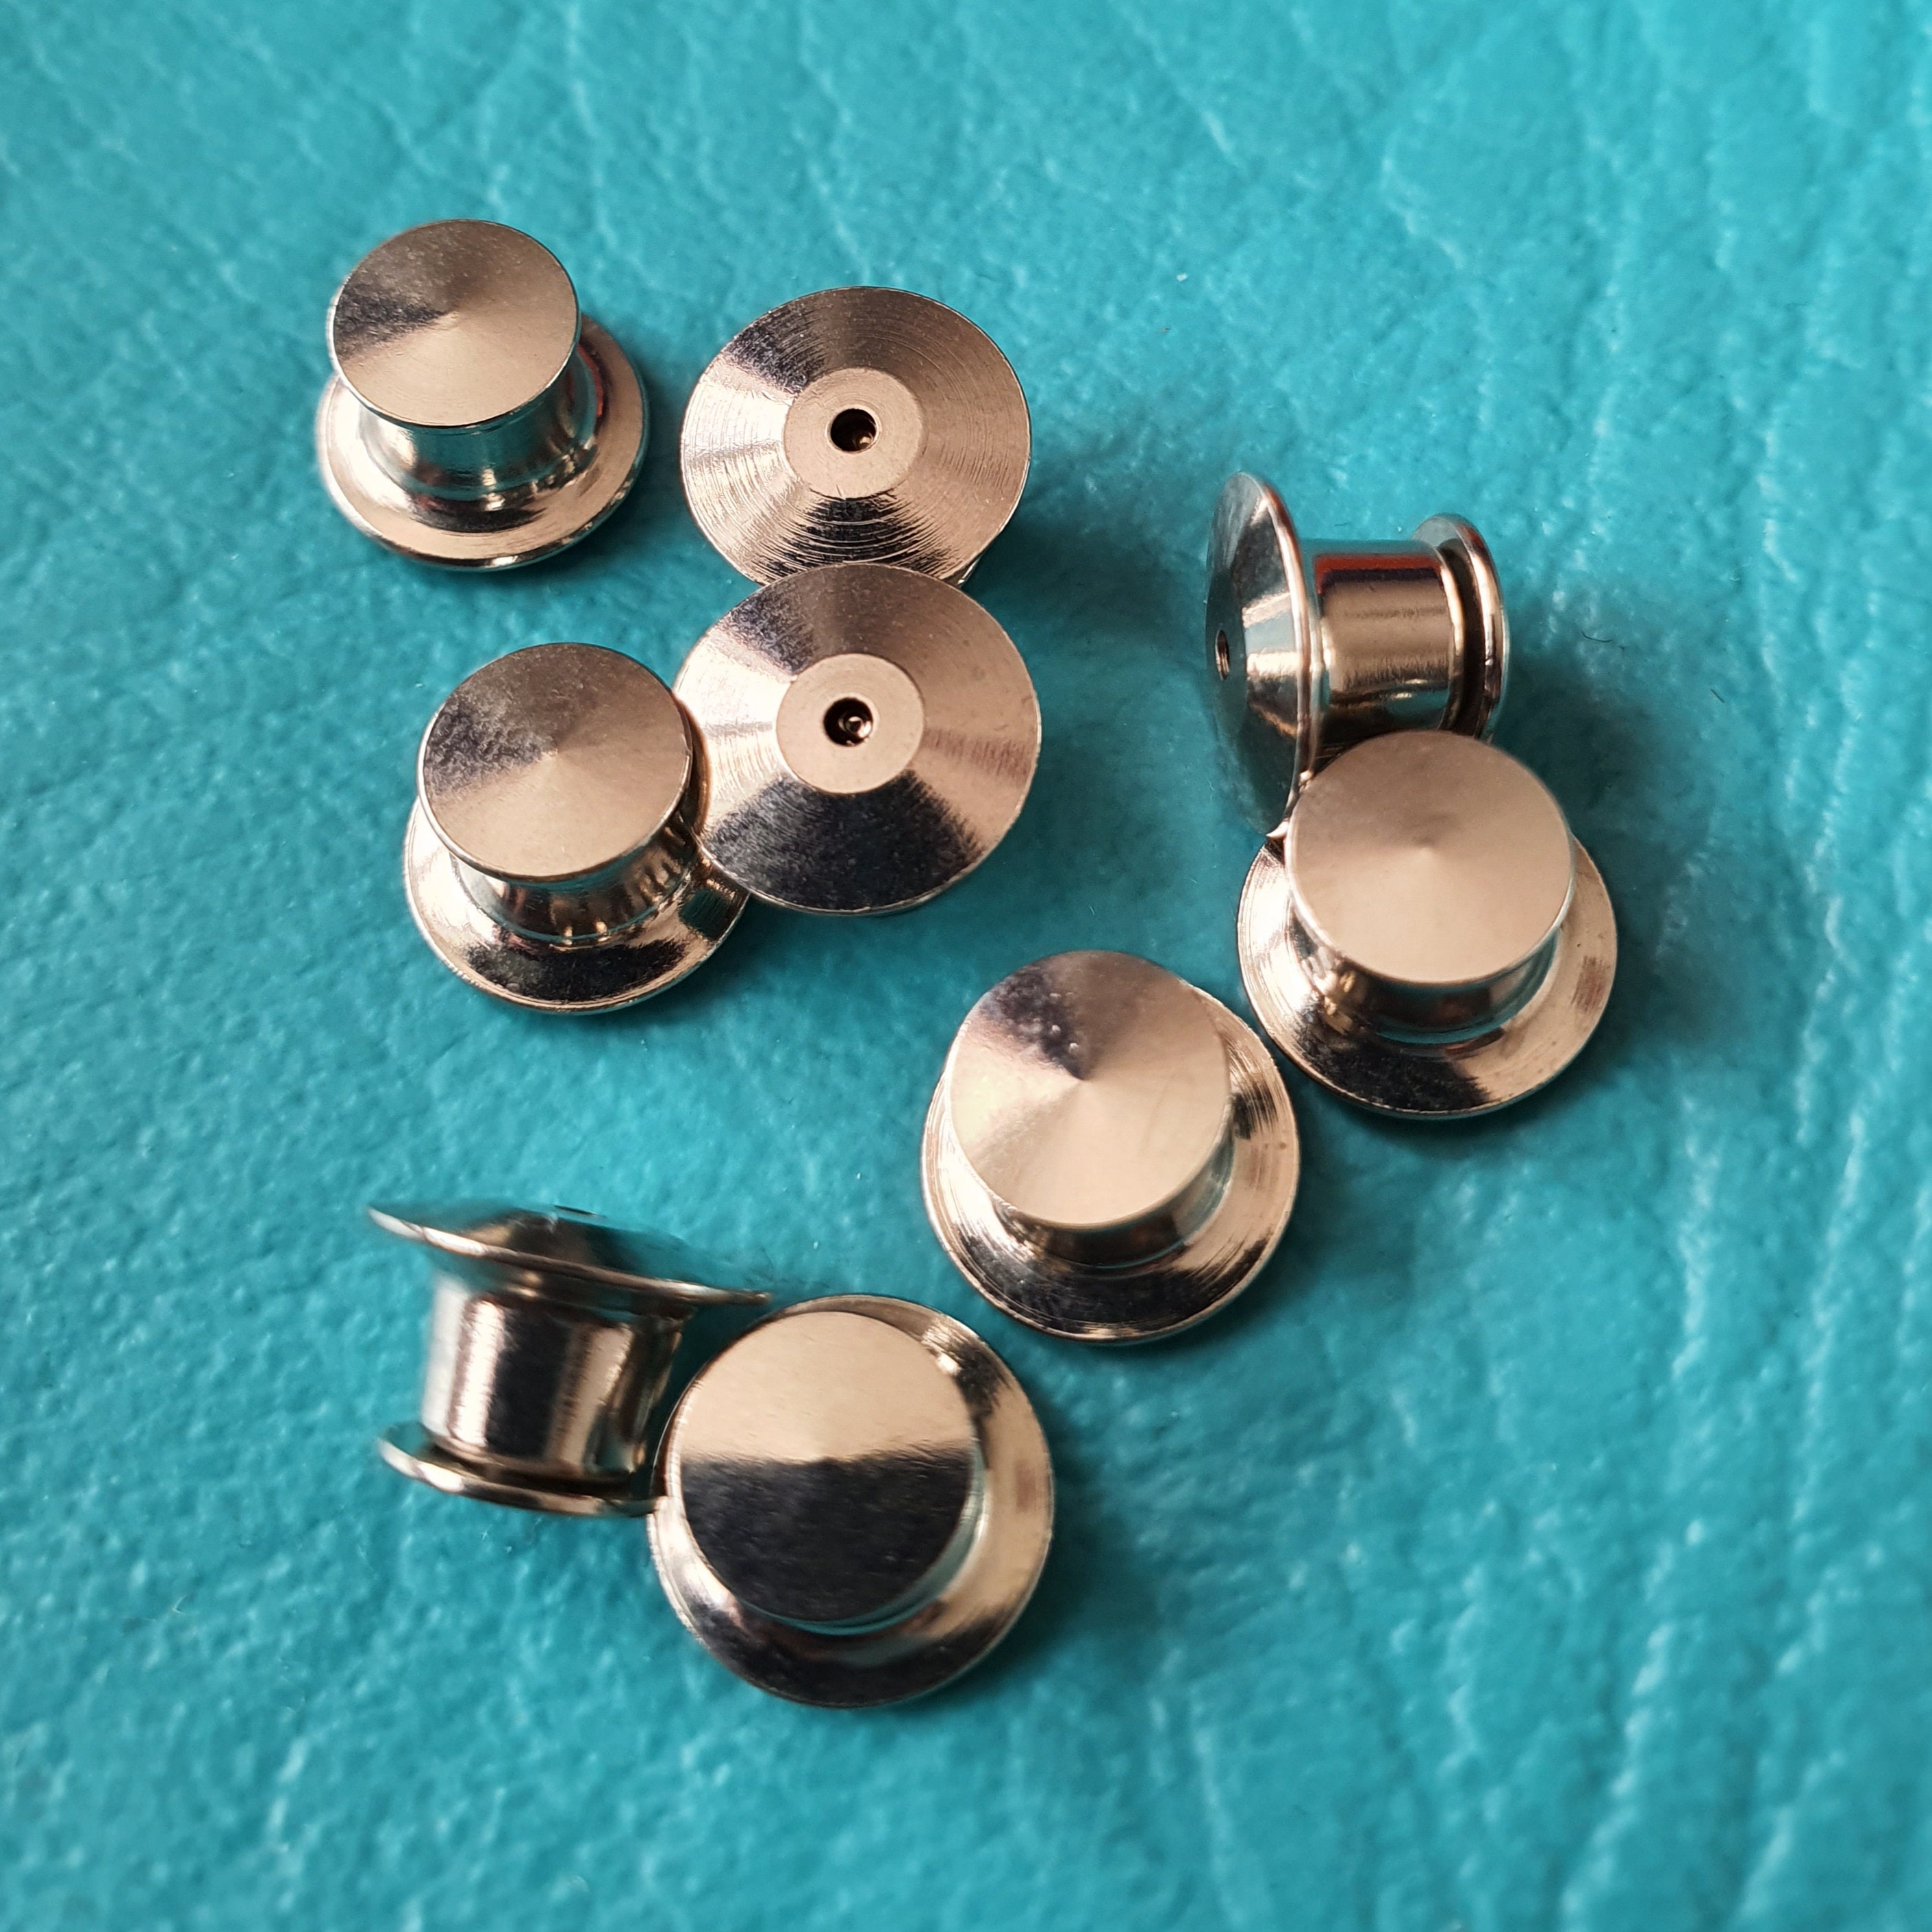 Uxcell Pin Backs Metal Lapel Pin Backing Enamel Pin Brooch Holder Locking  Clasp Silver Tone 30 Pack 